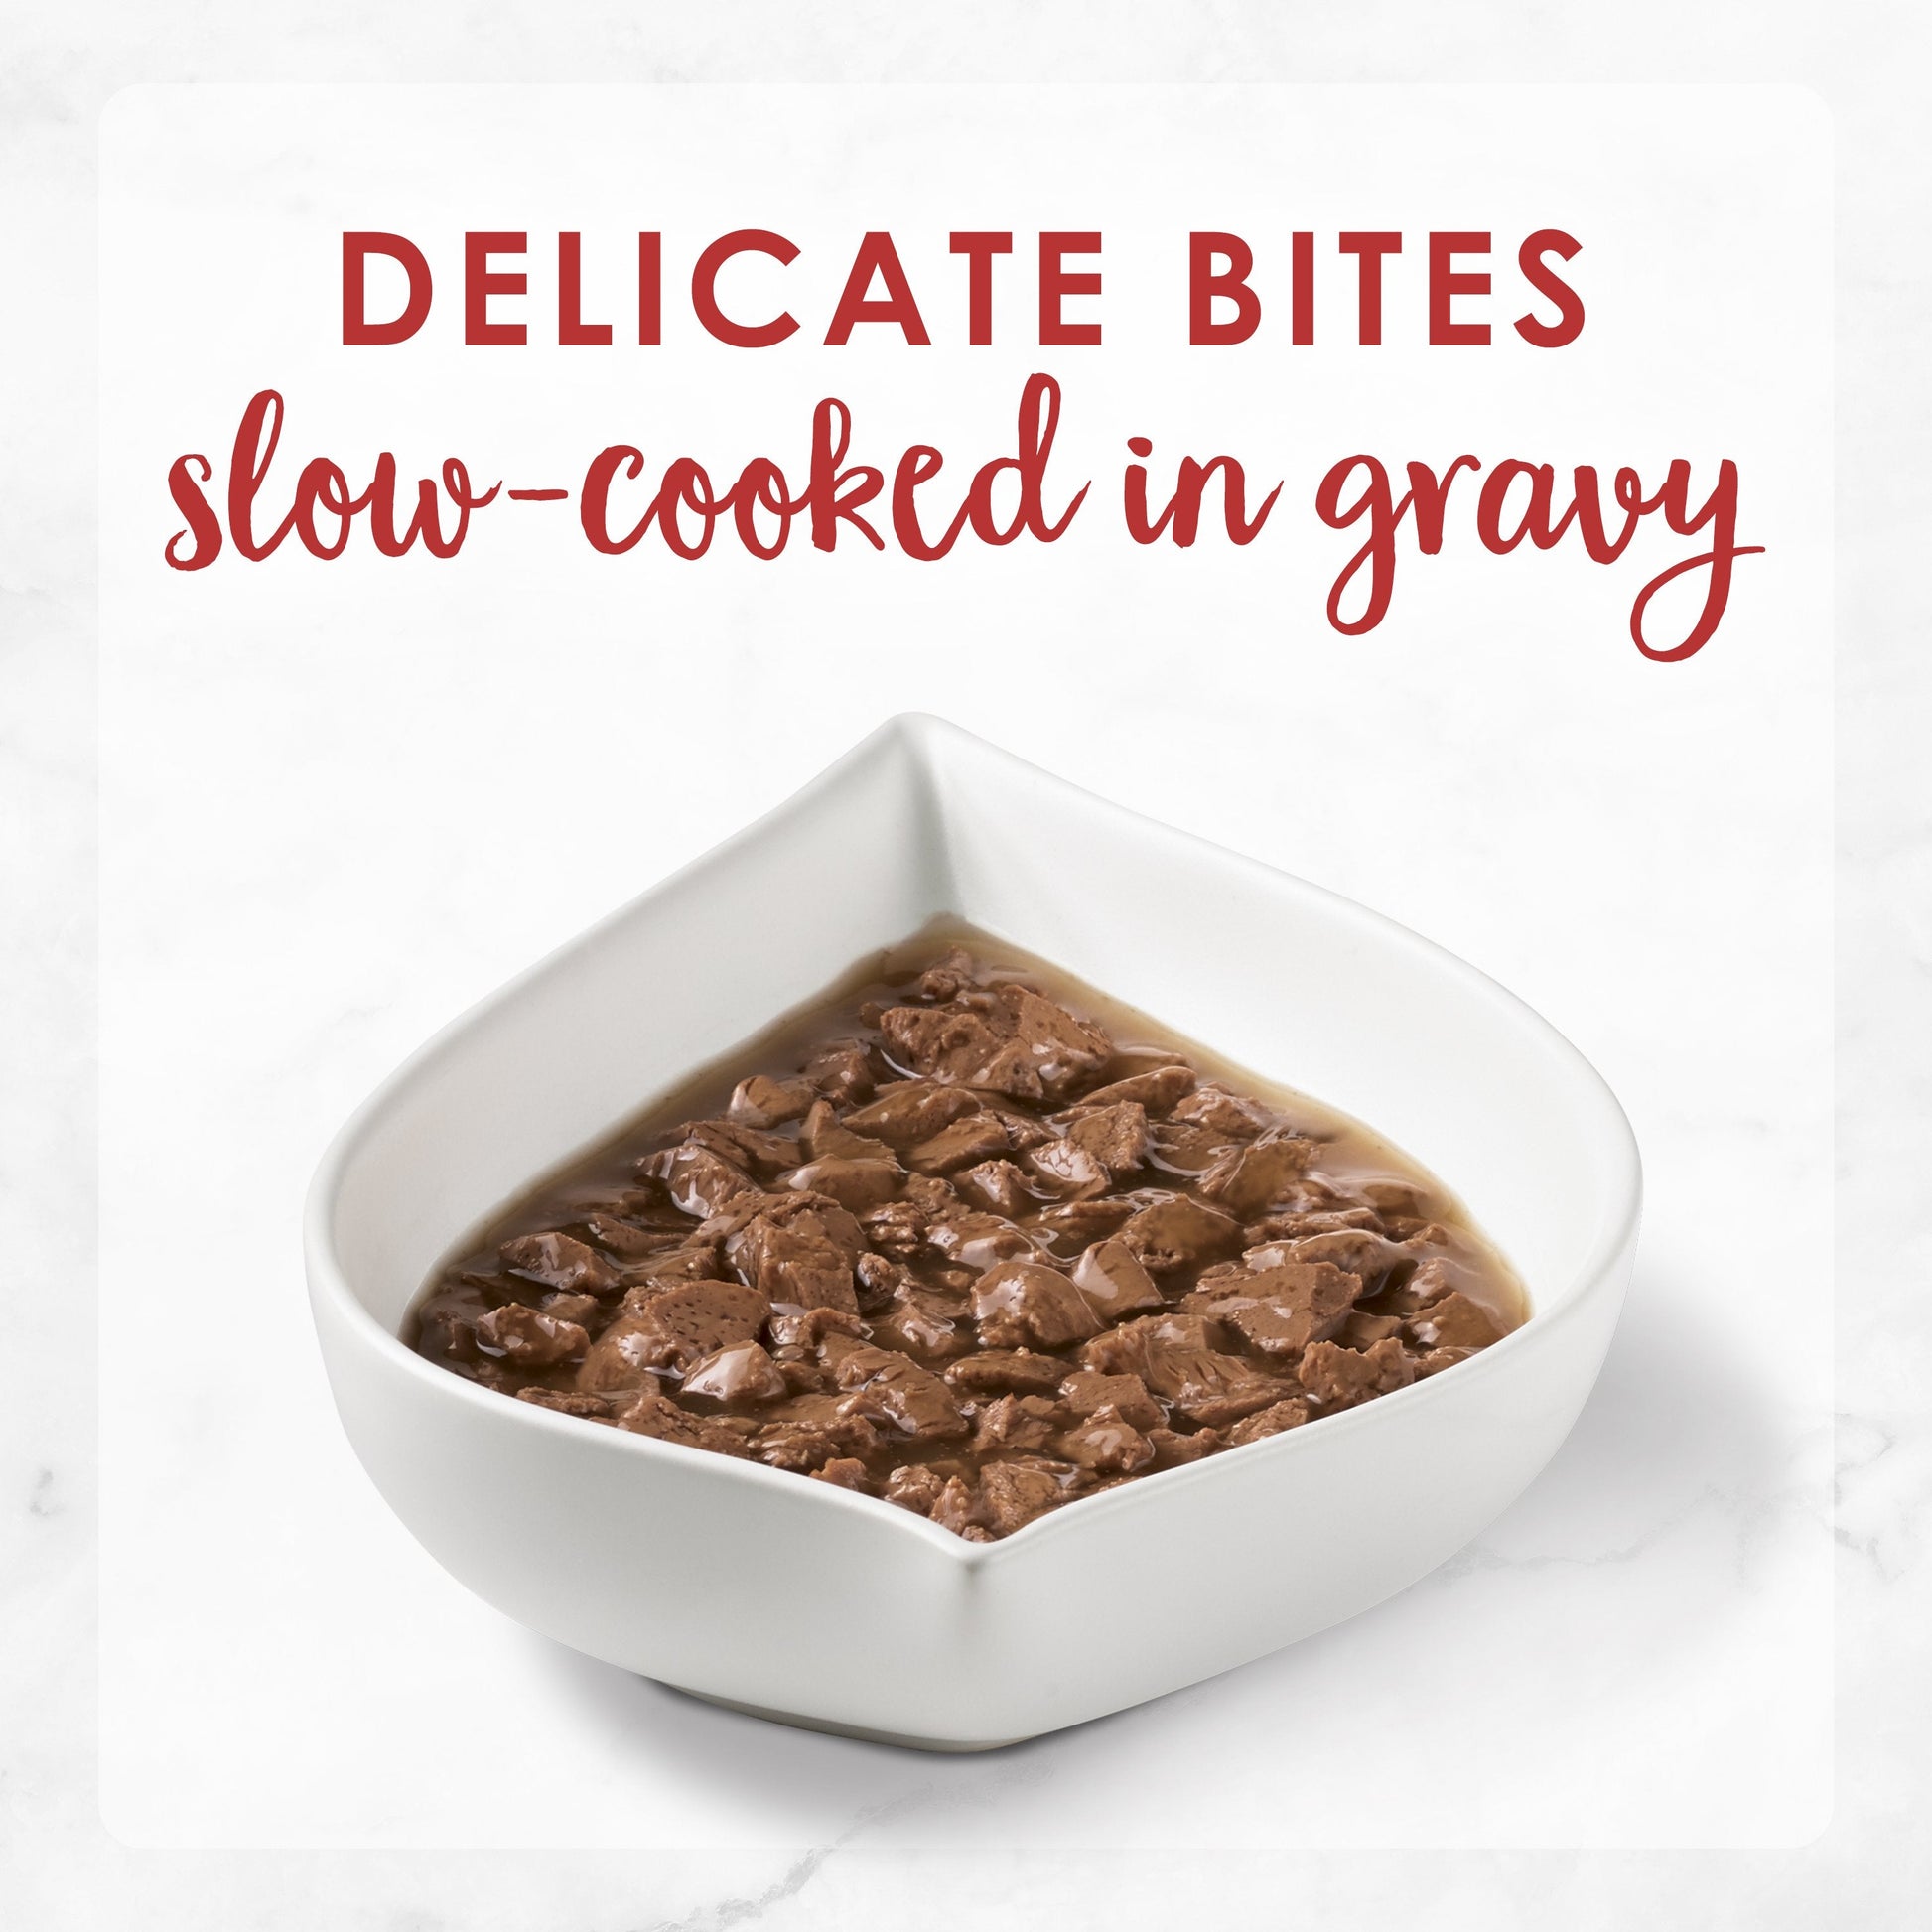 Delicate bites in slow-cooked gravy